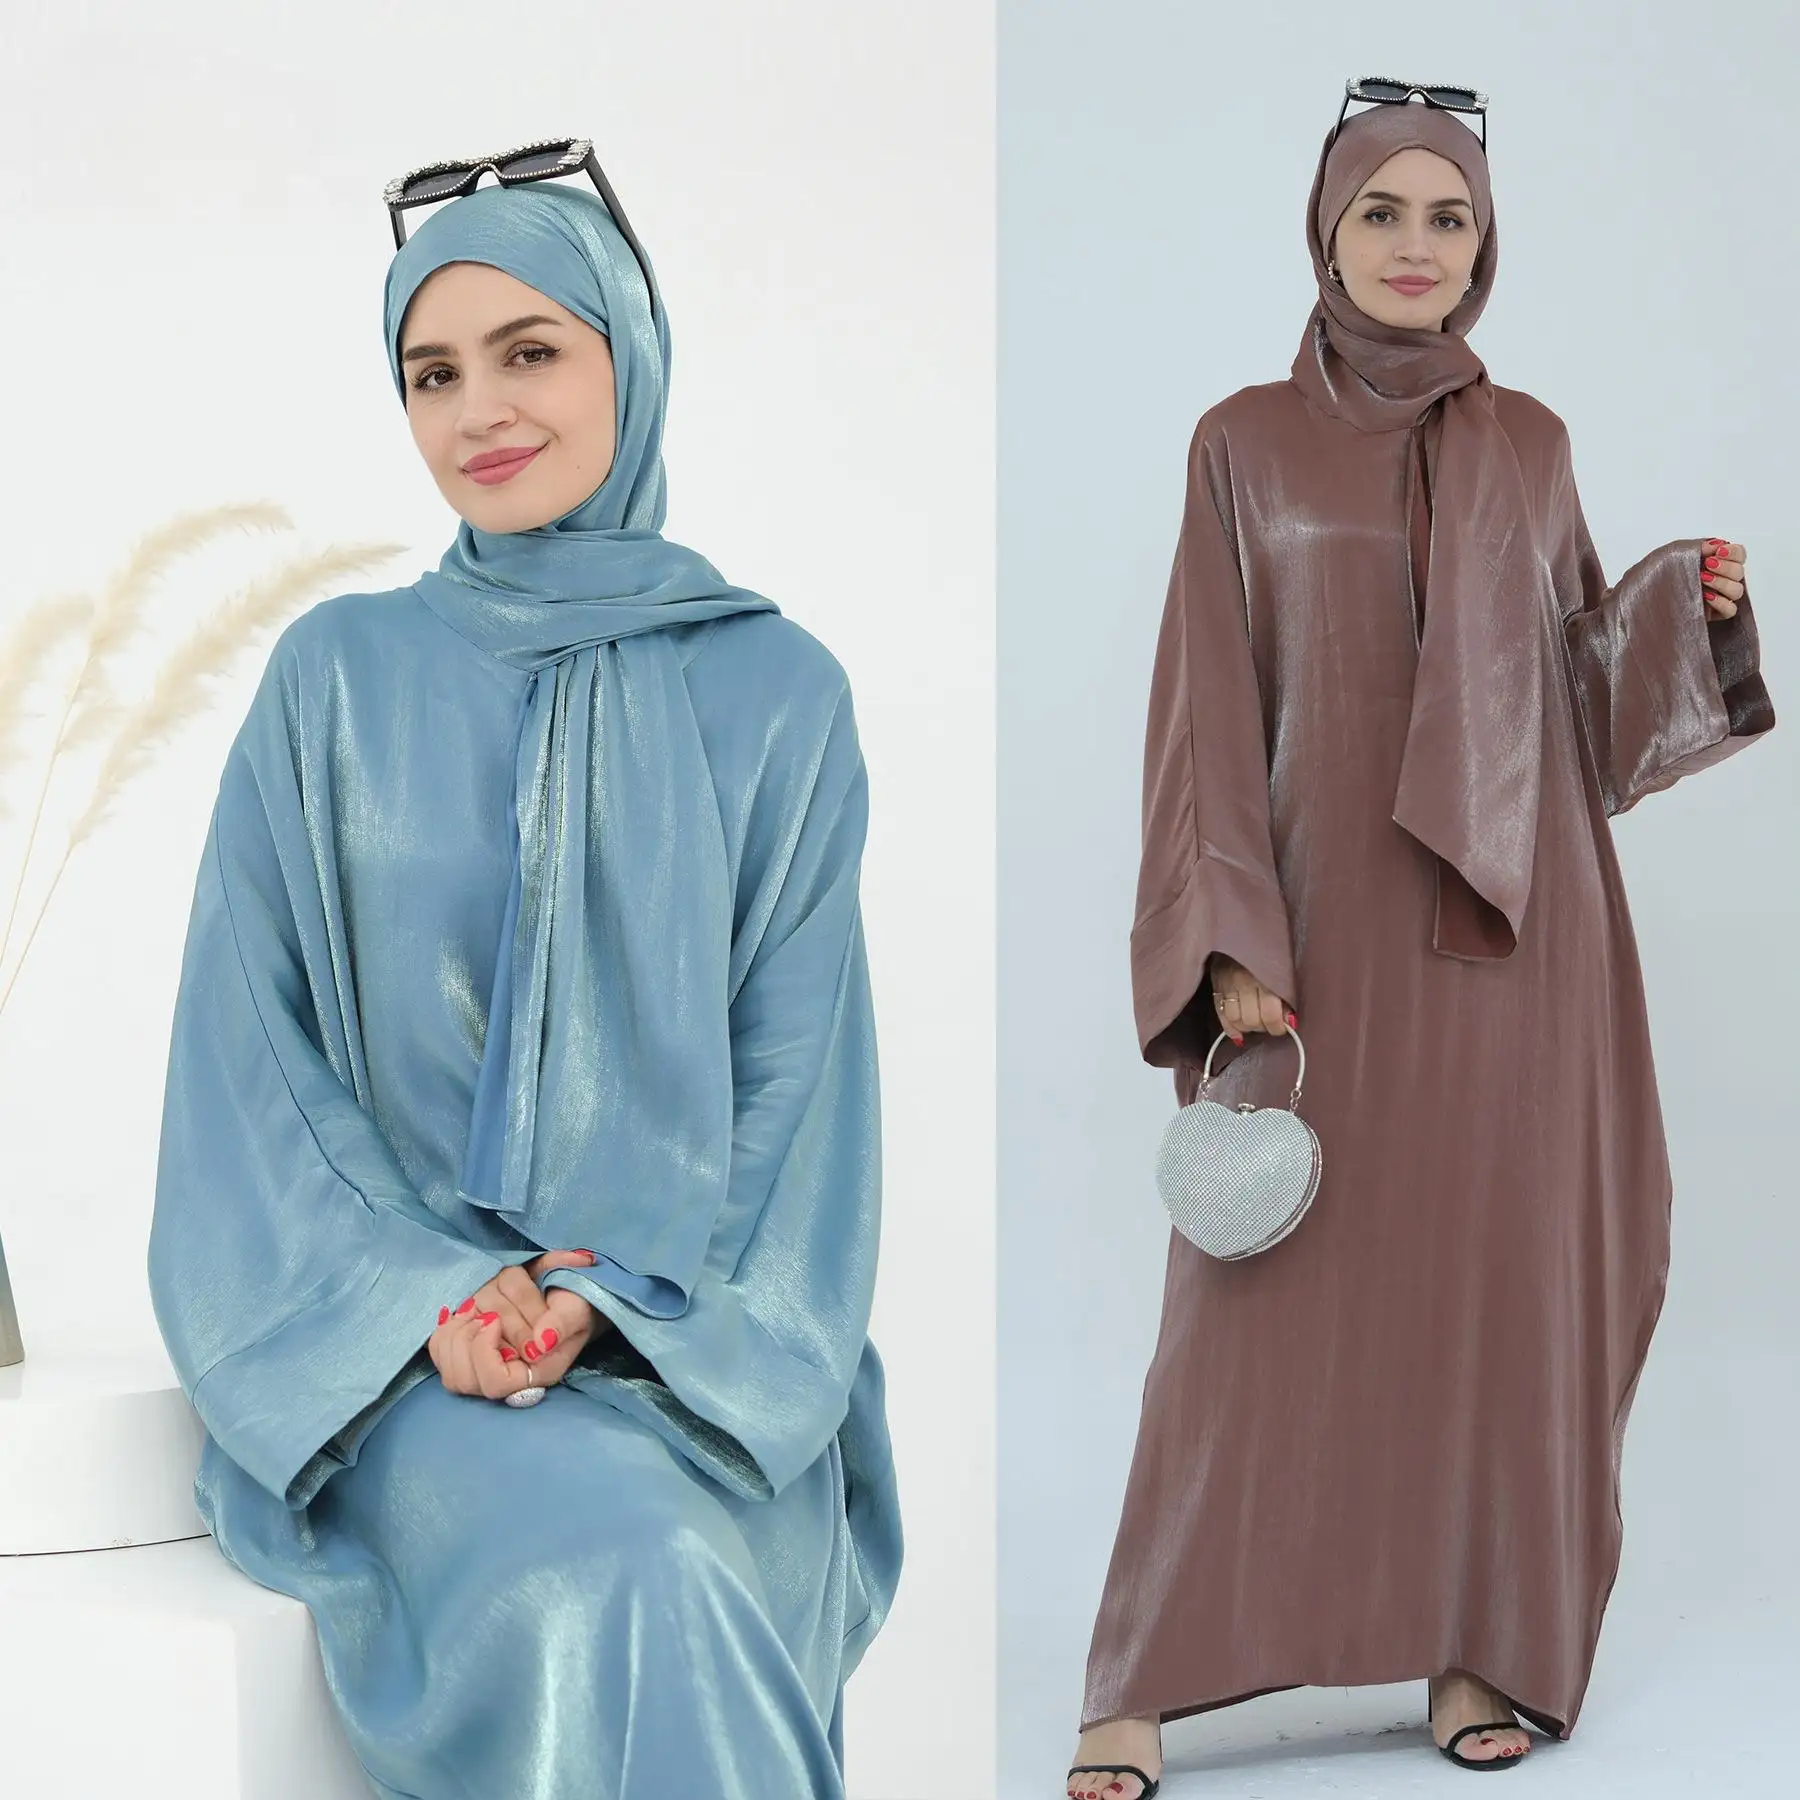 408 Vestido feminino popular brilhante de último vestido islâmico desenhos de caftan de cetim para mulheres e senhoras vestido abaya